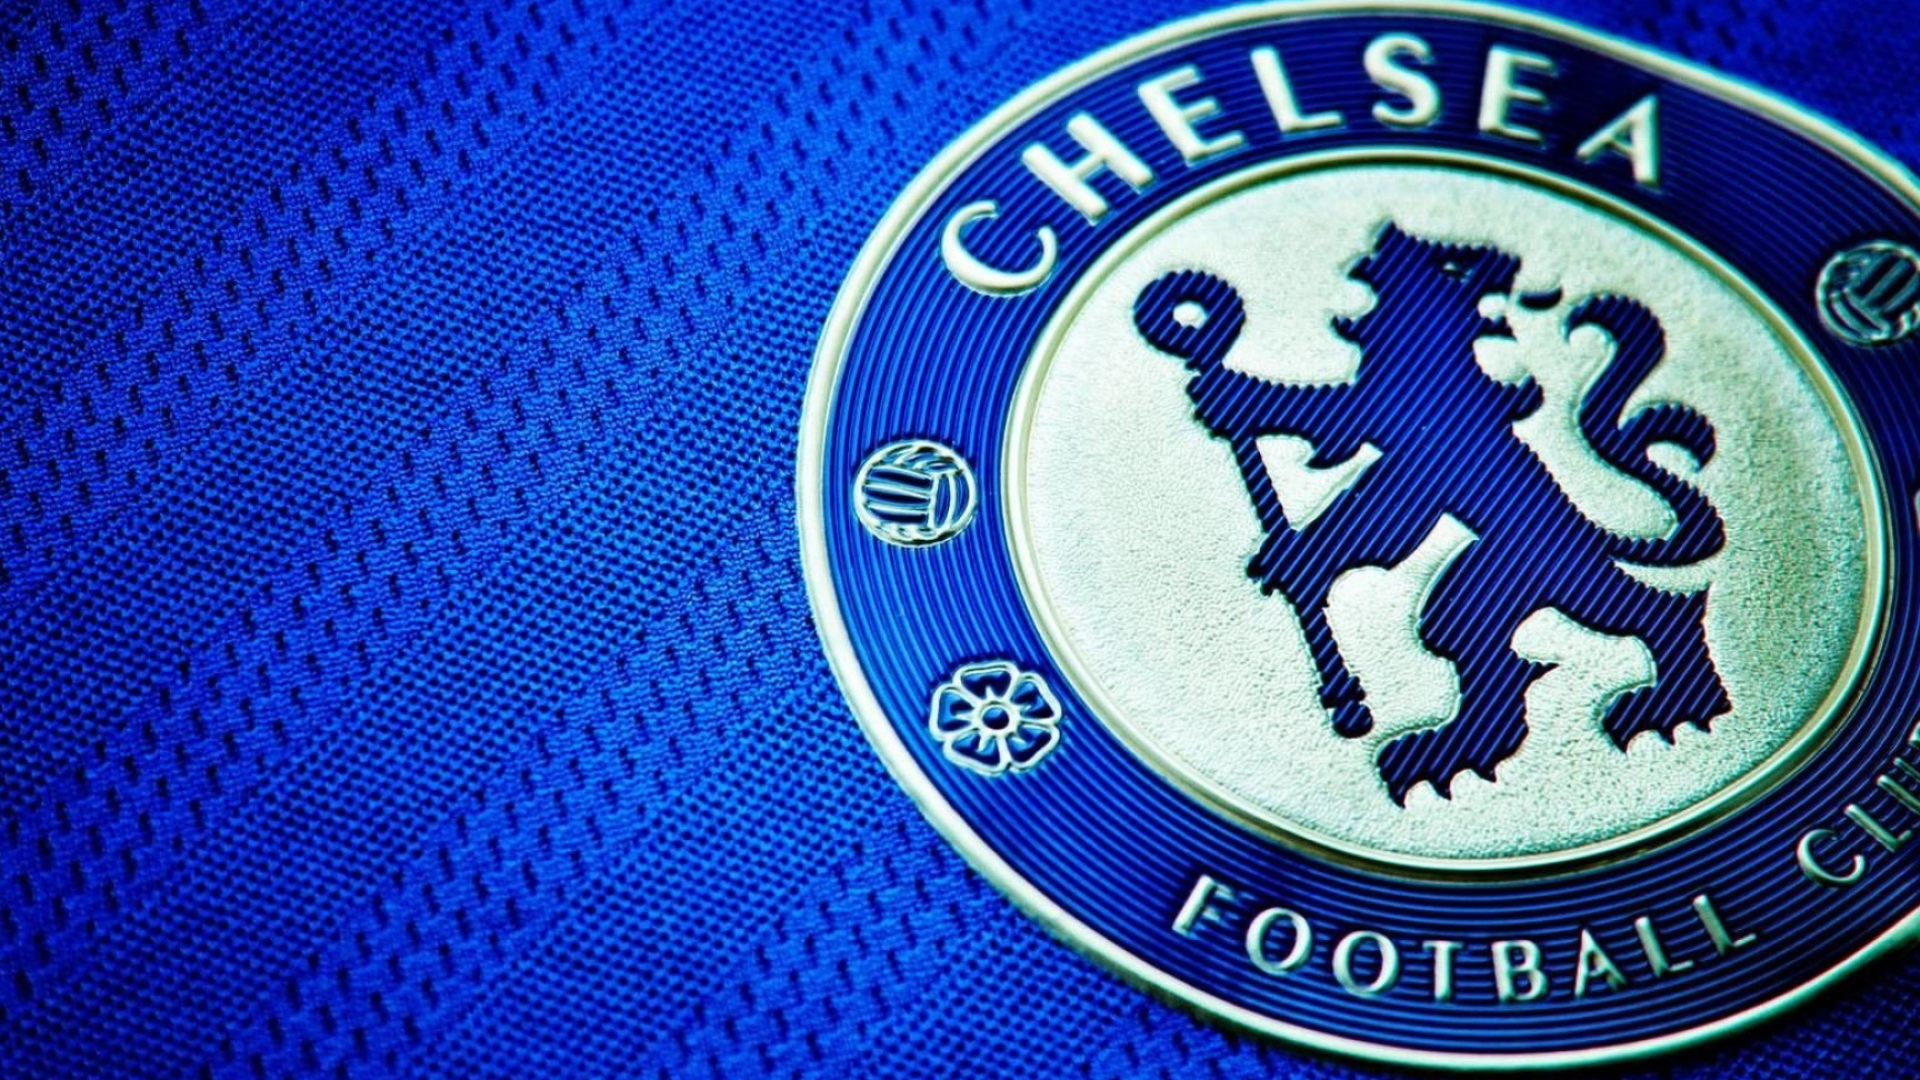 Chelsea logo, Sports team, Chelsea logo wallpapers, Chelsea logo backgrounds, 1920x1080 Full HD Desktop